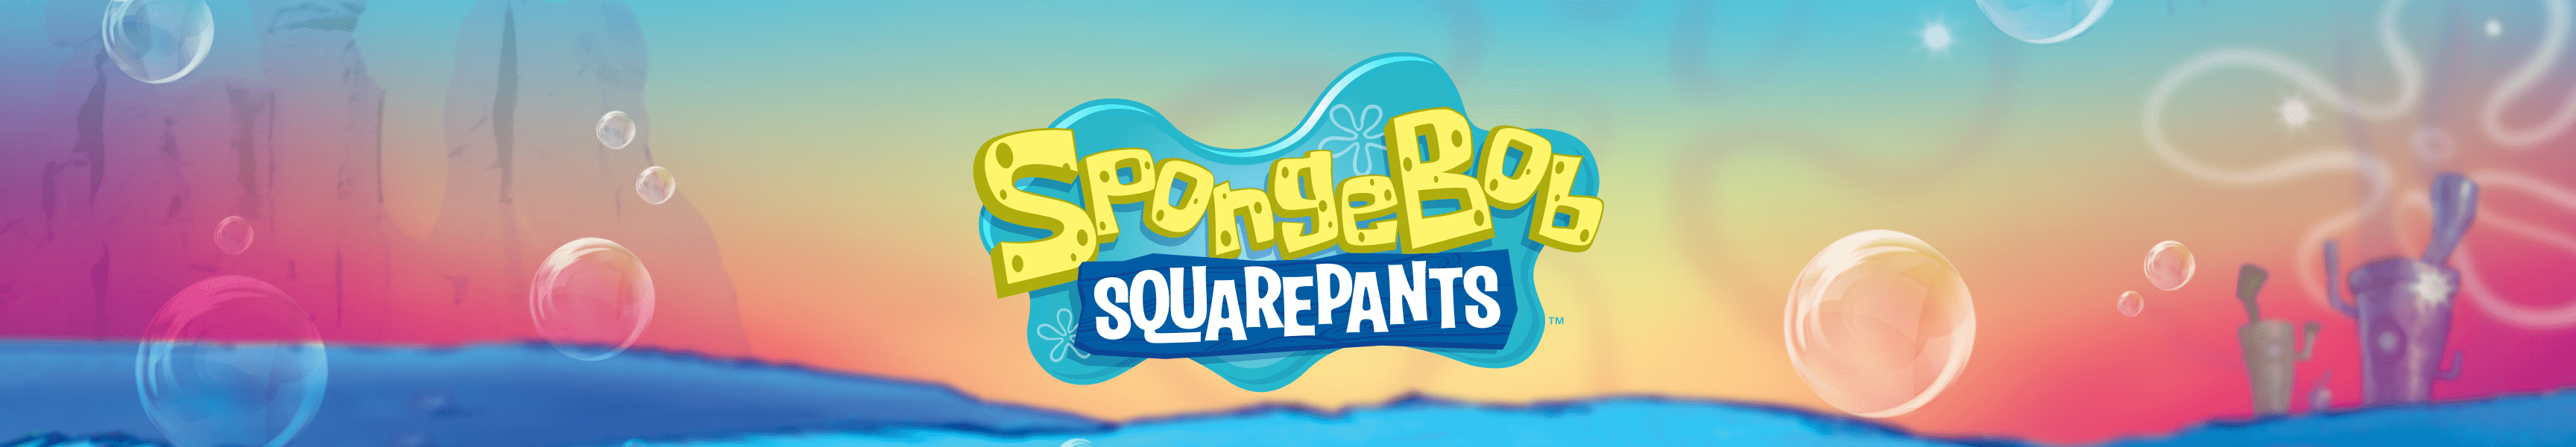 SpongeBob SquarePants Gifts Under $30